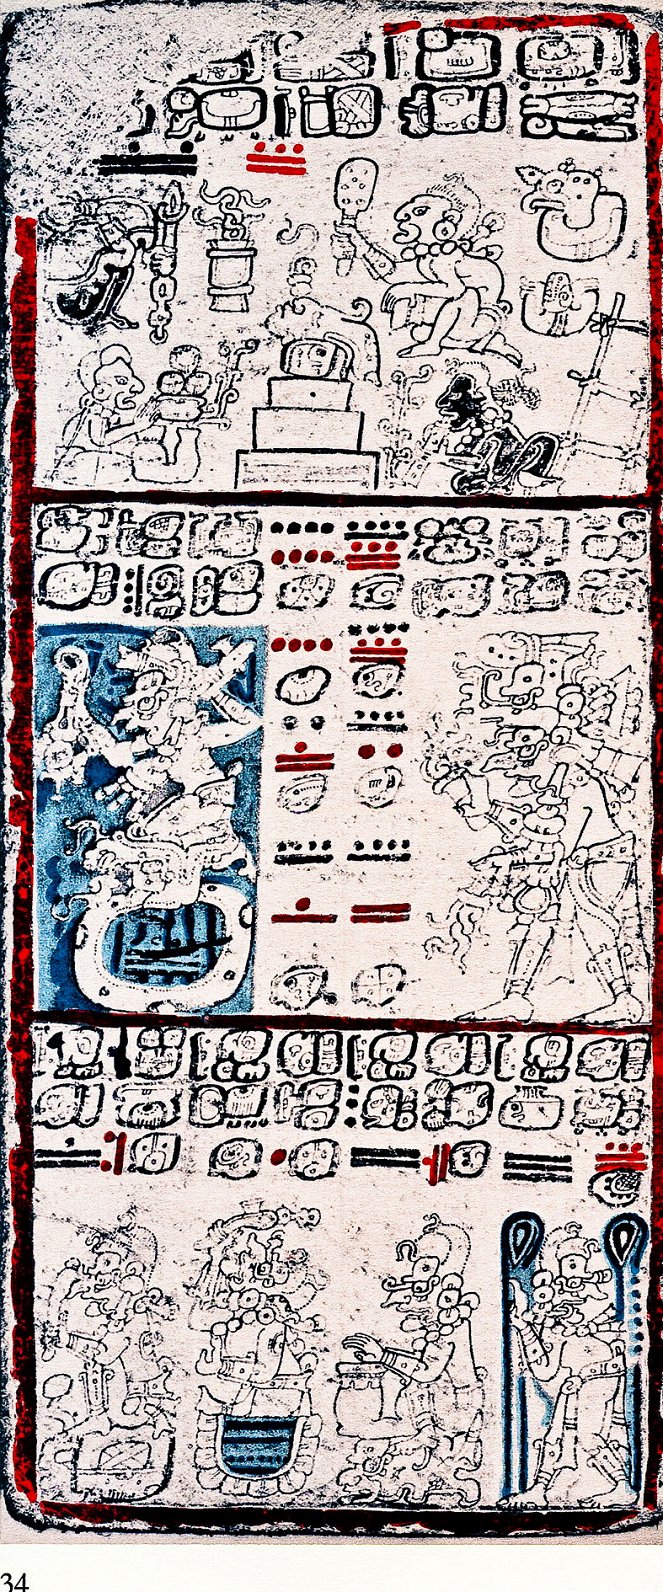 Ancient Aliens - Season 4 - The Mayan Conspiracy - Photos